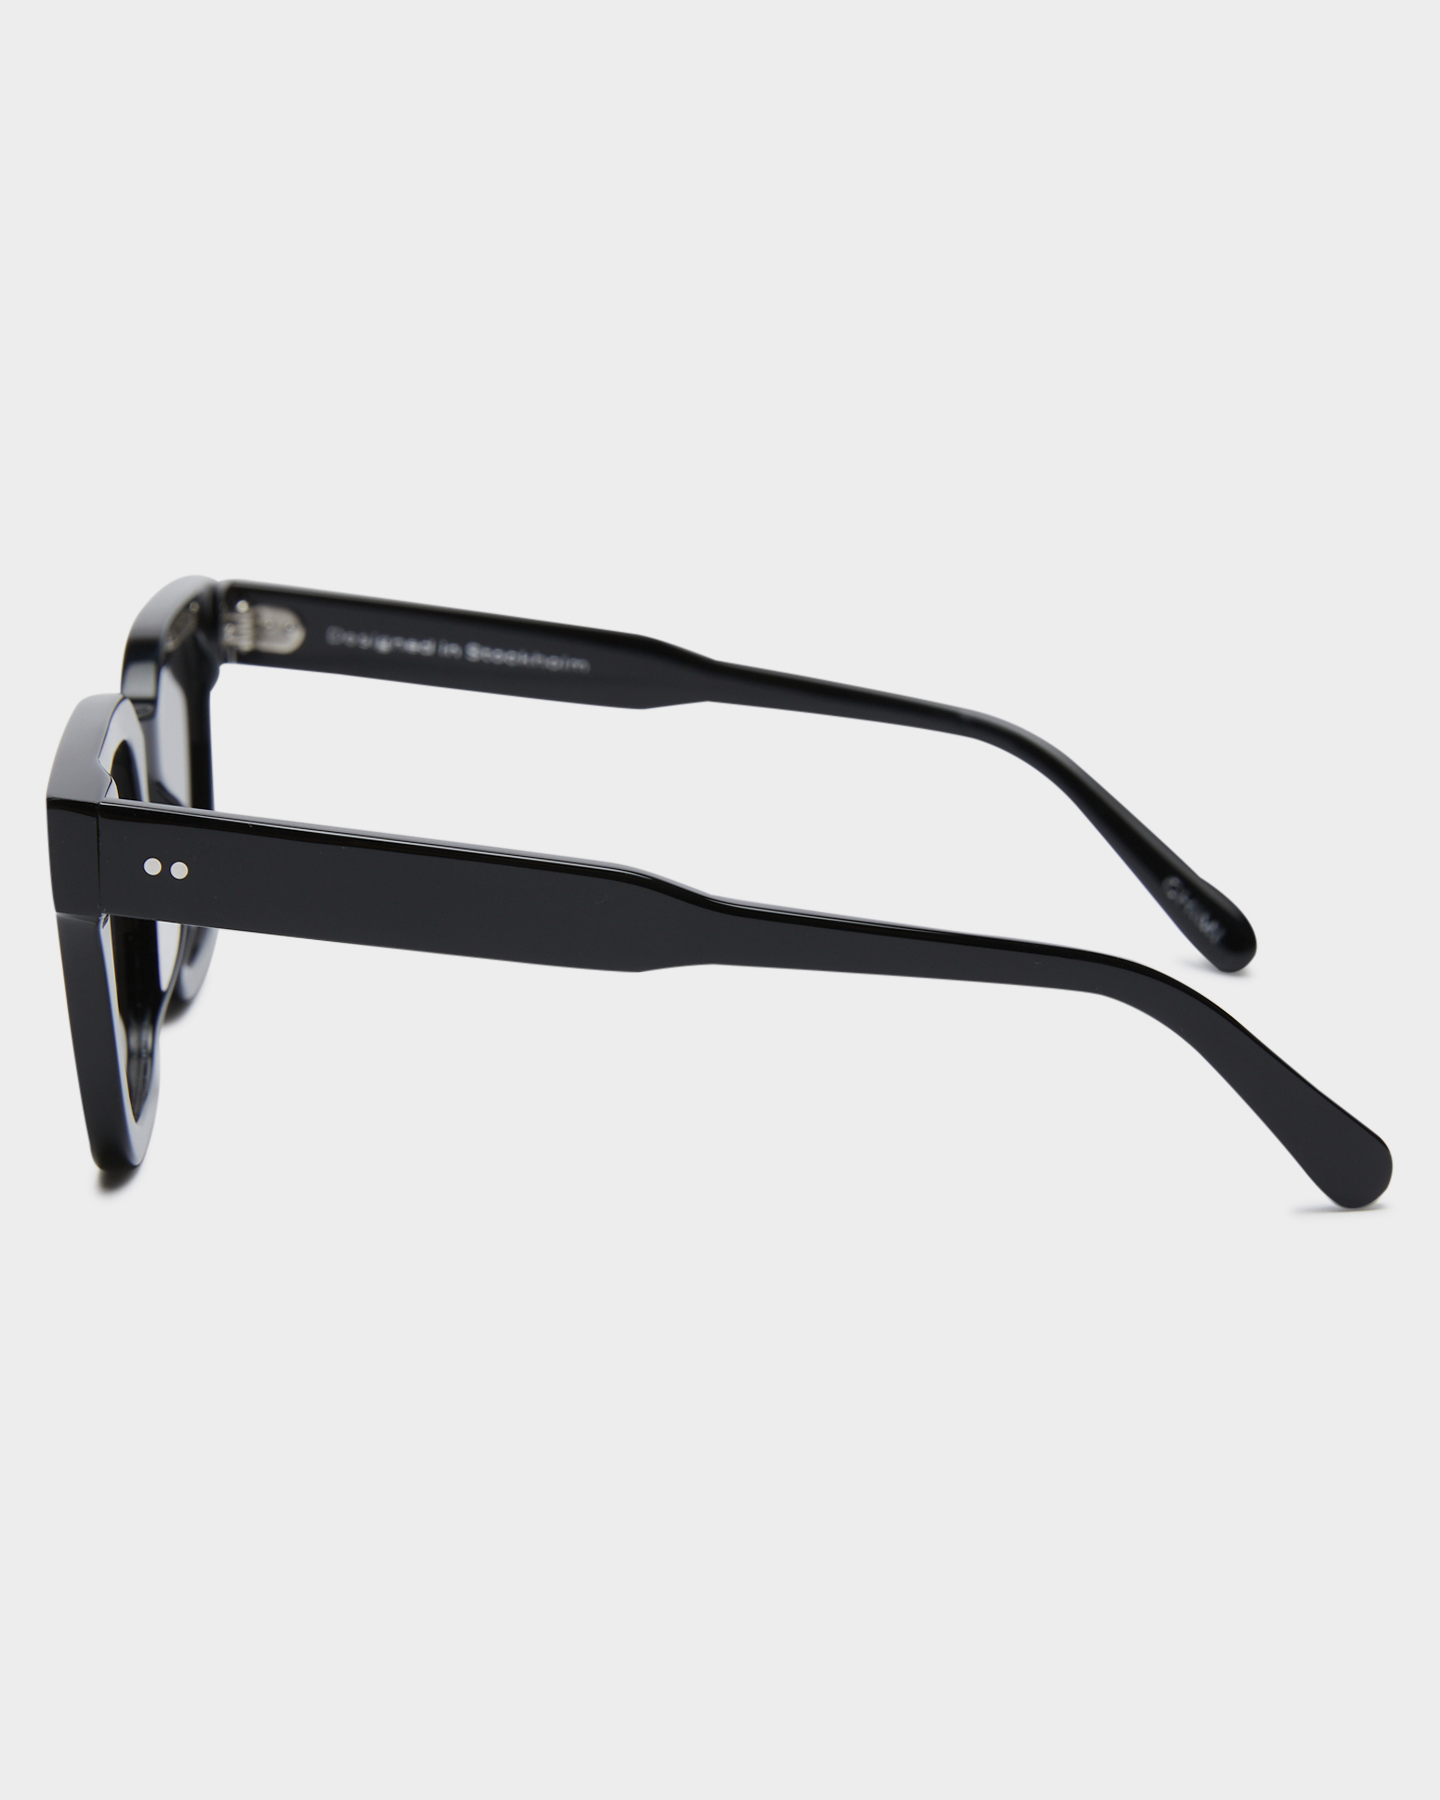 Chimi Eyewear Core 4L Sunglasses - Black | SurfStitch